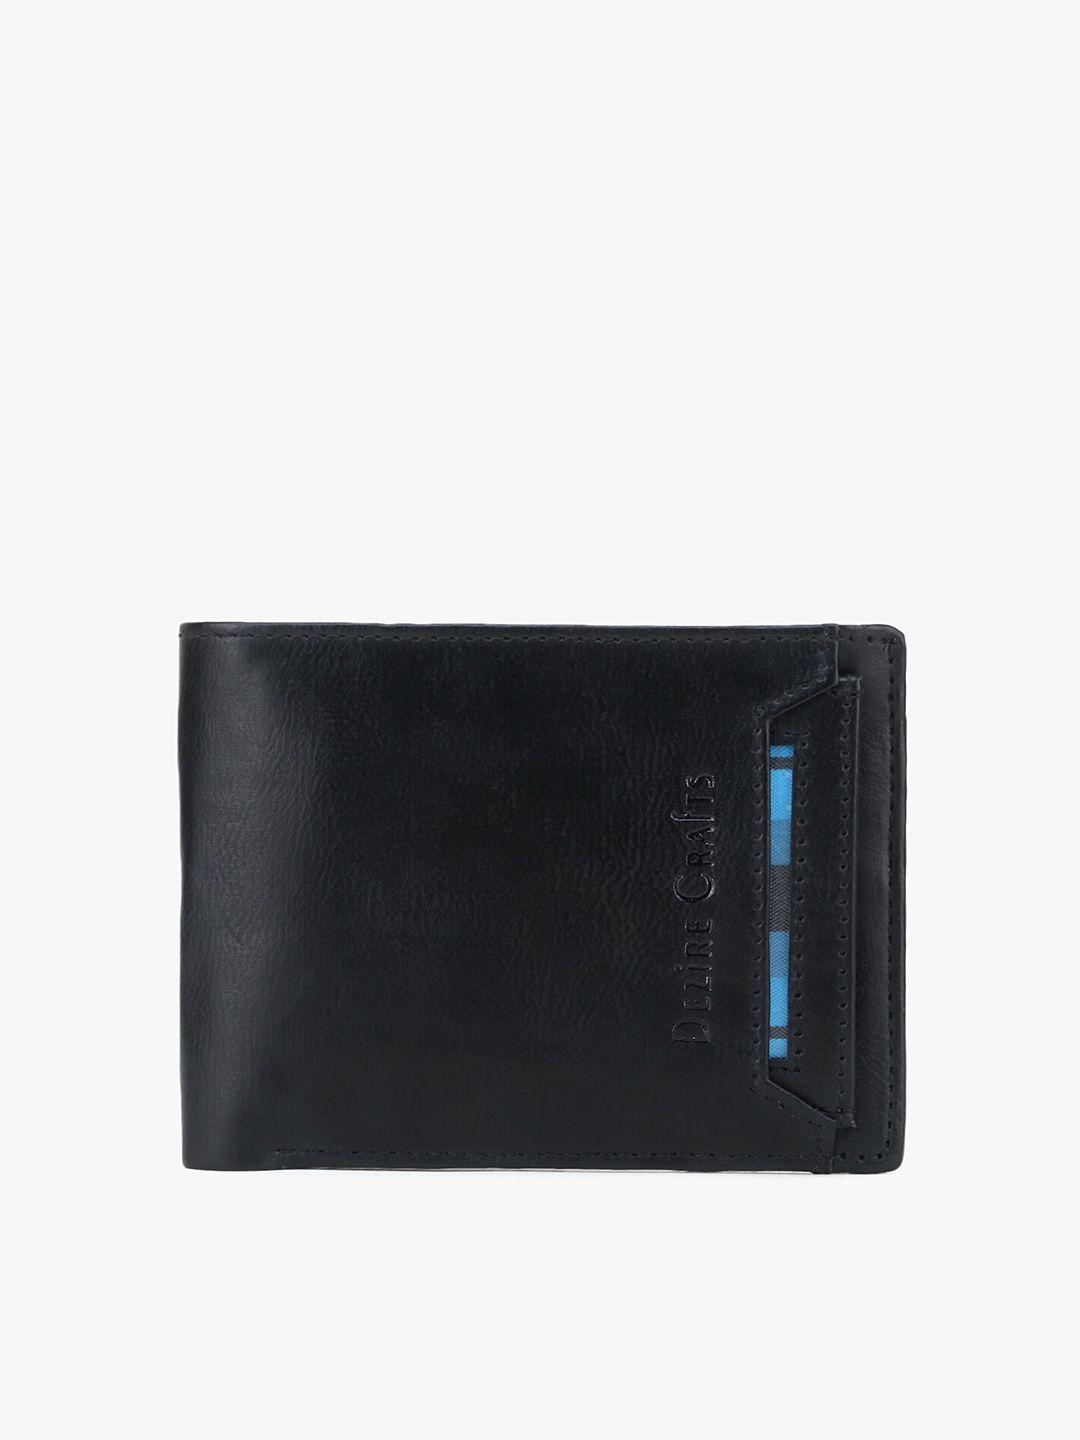 dezire crafts men black textured two fold wallet